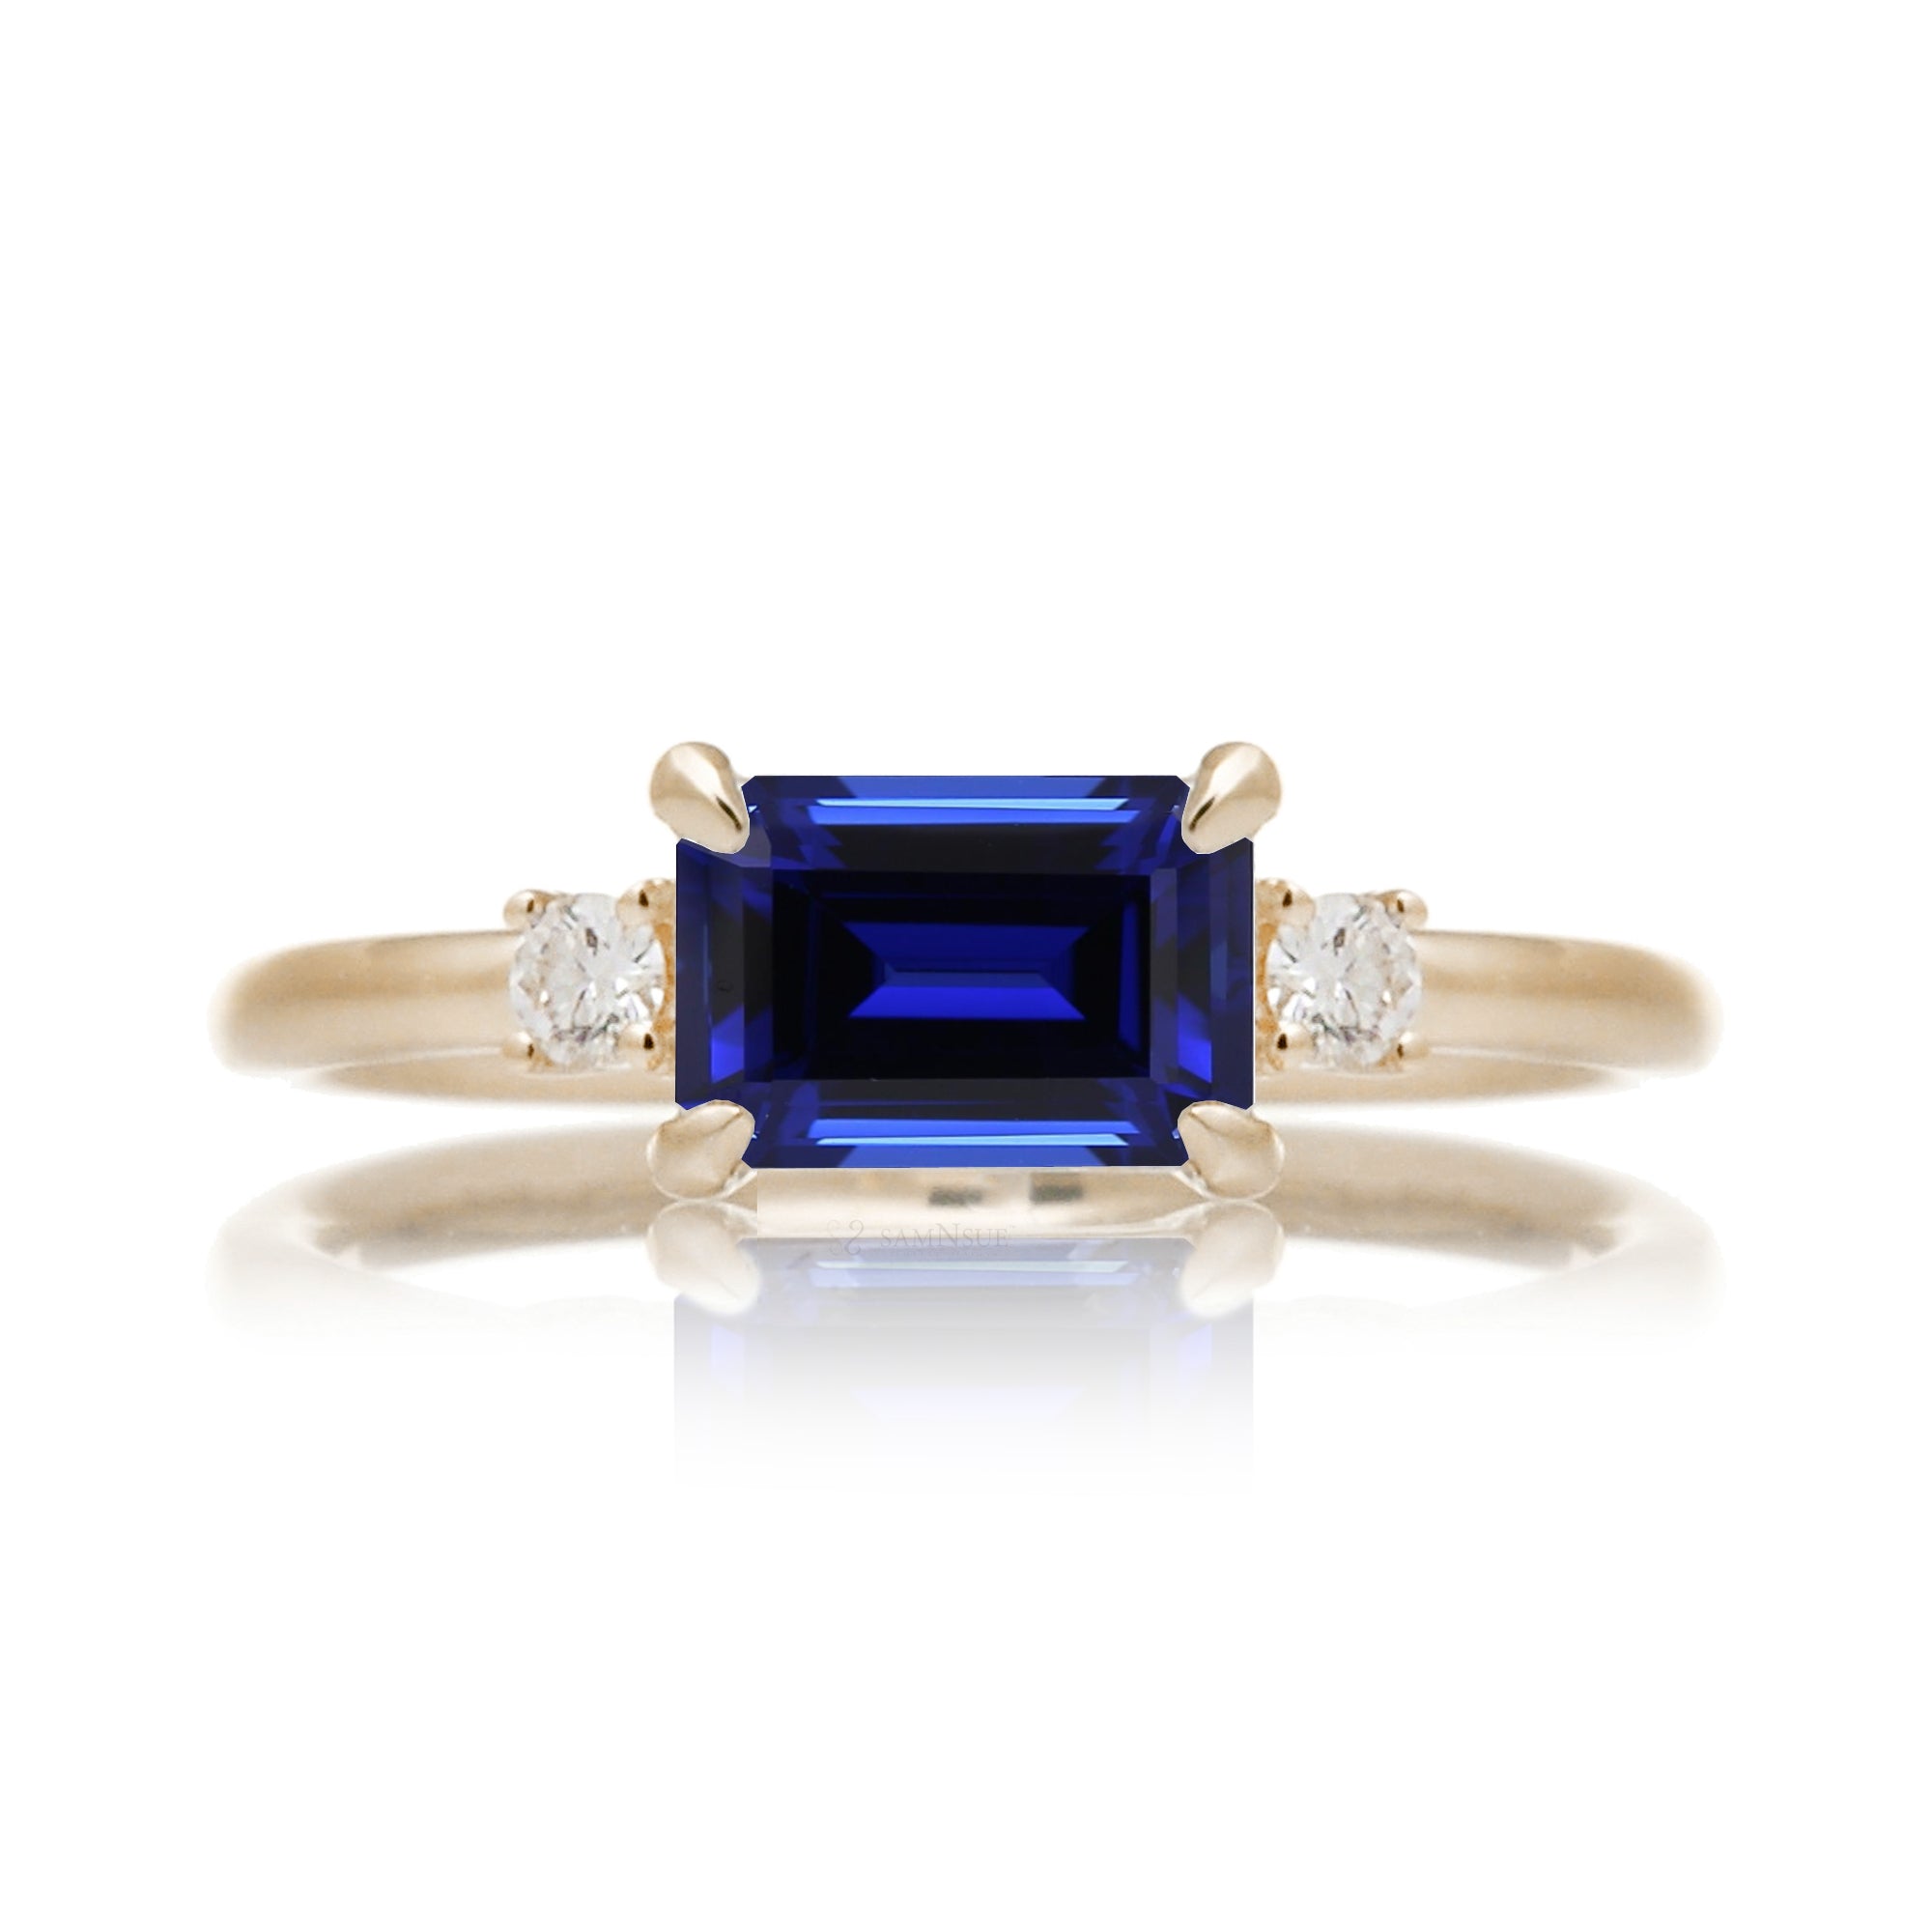 Blue sapphire emerald cut three stone ring the Lena yellow gold